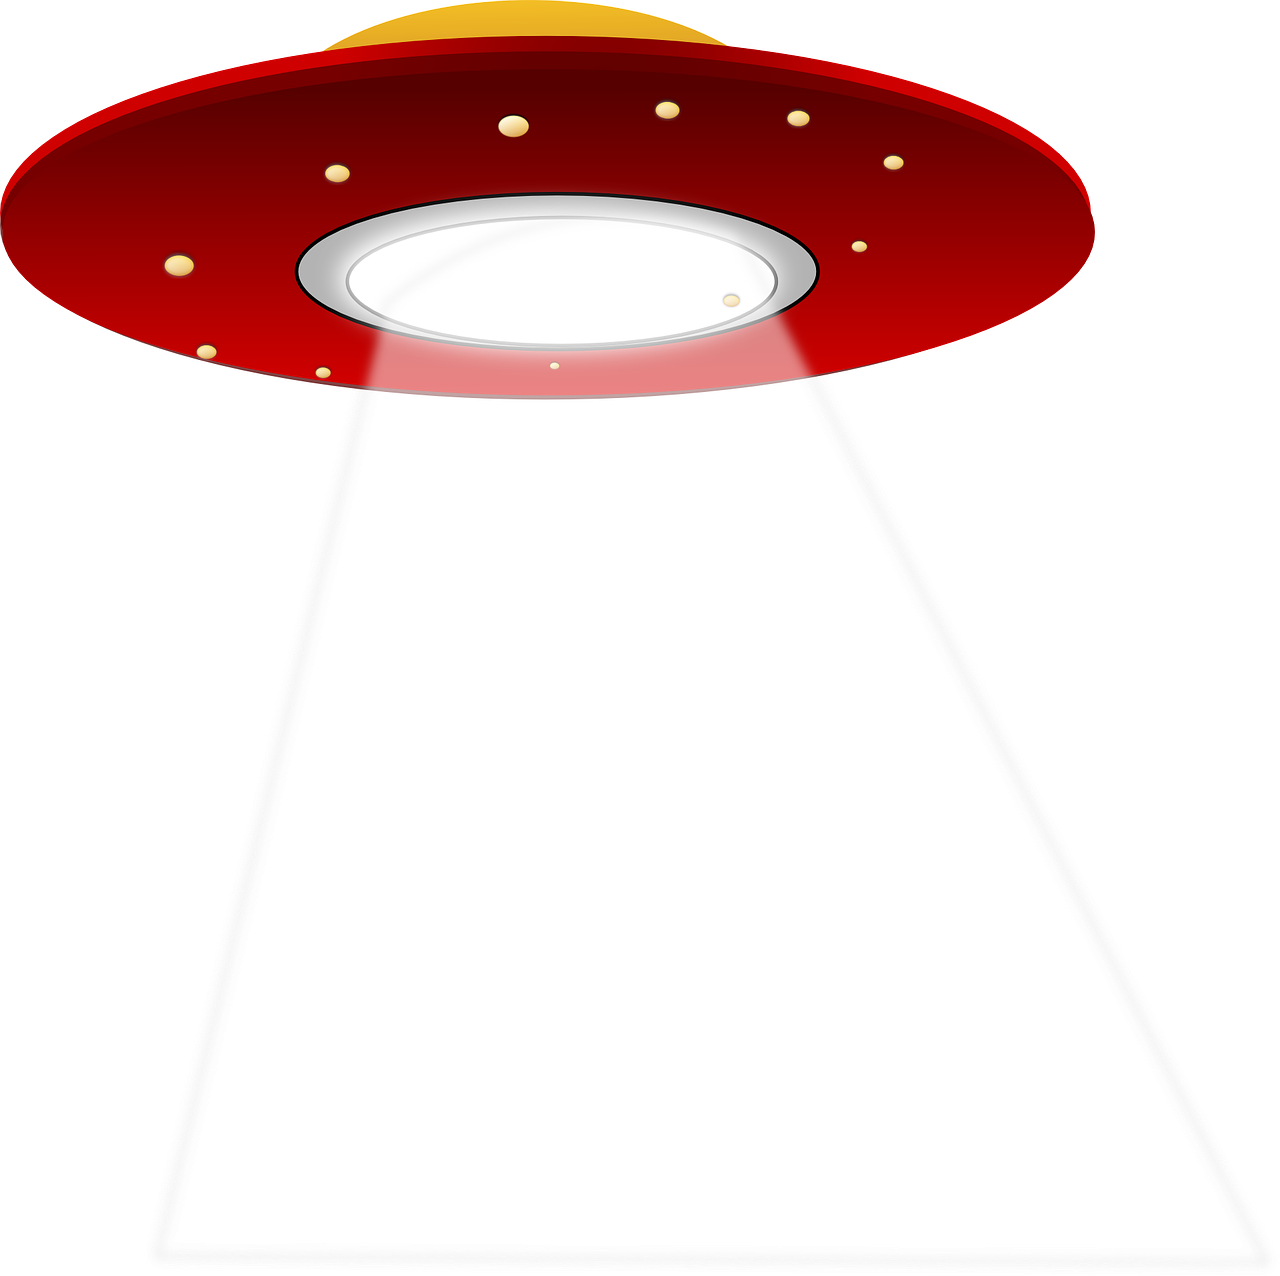 alien ufo spaceship free photo